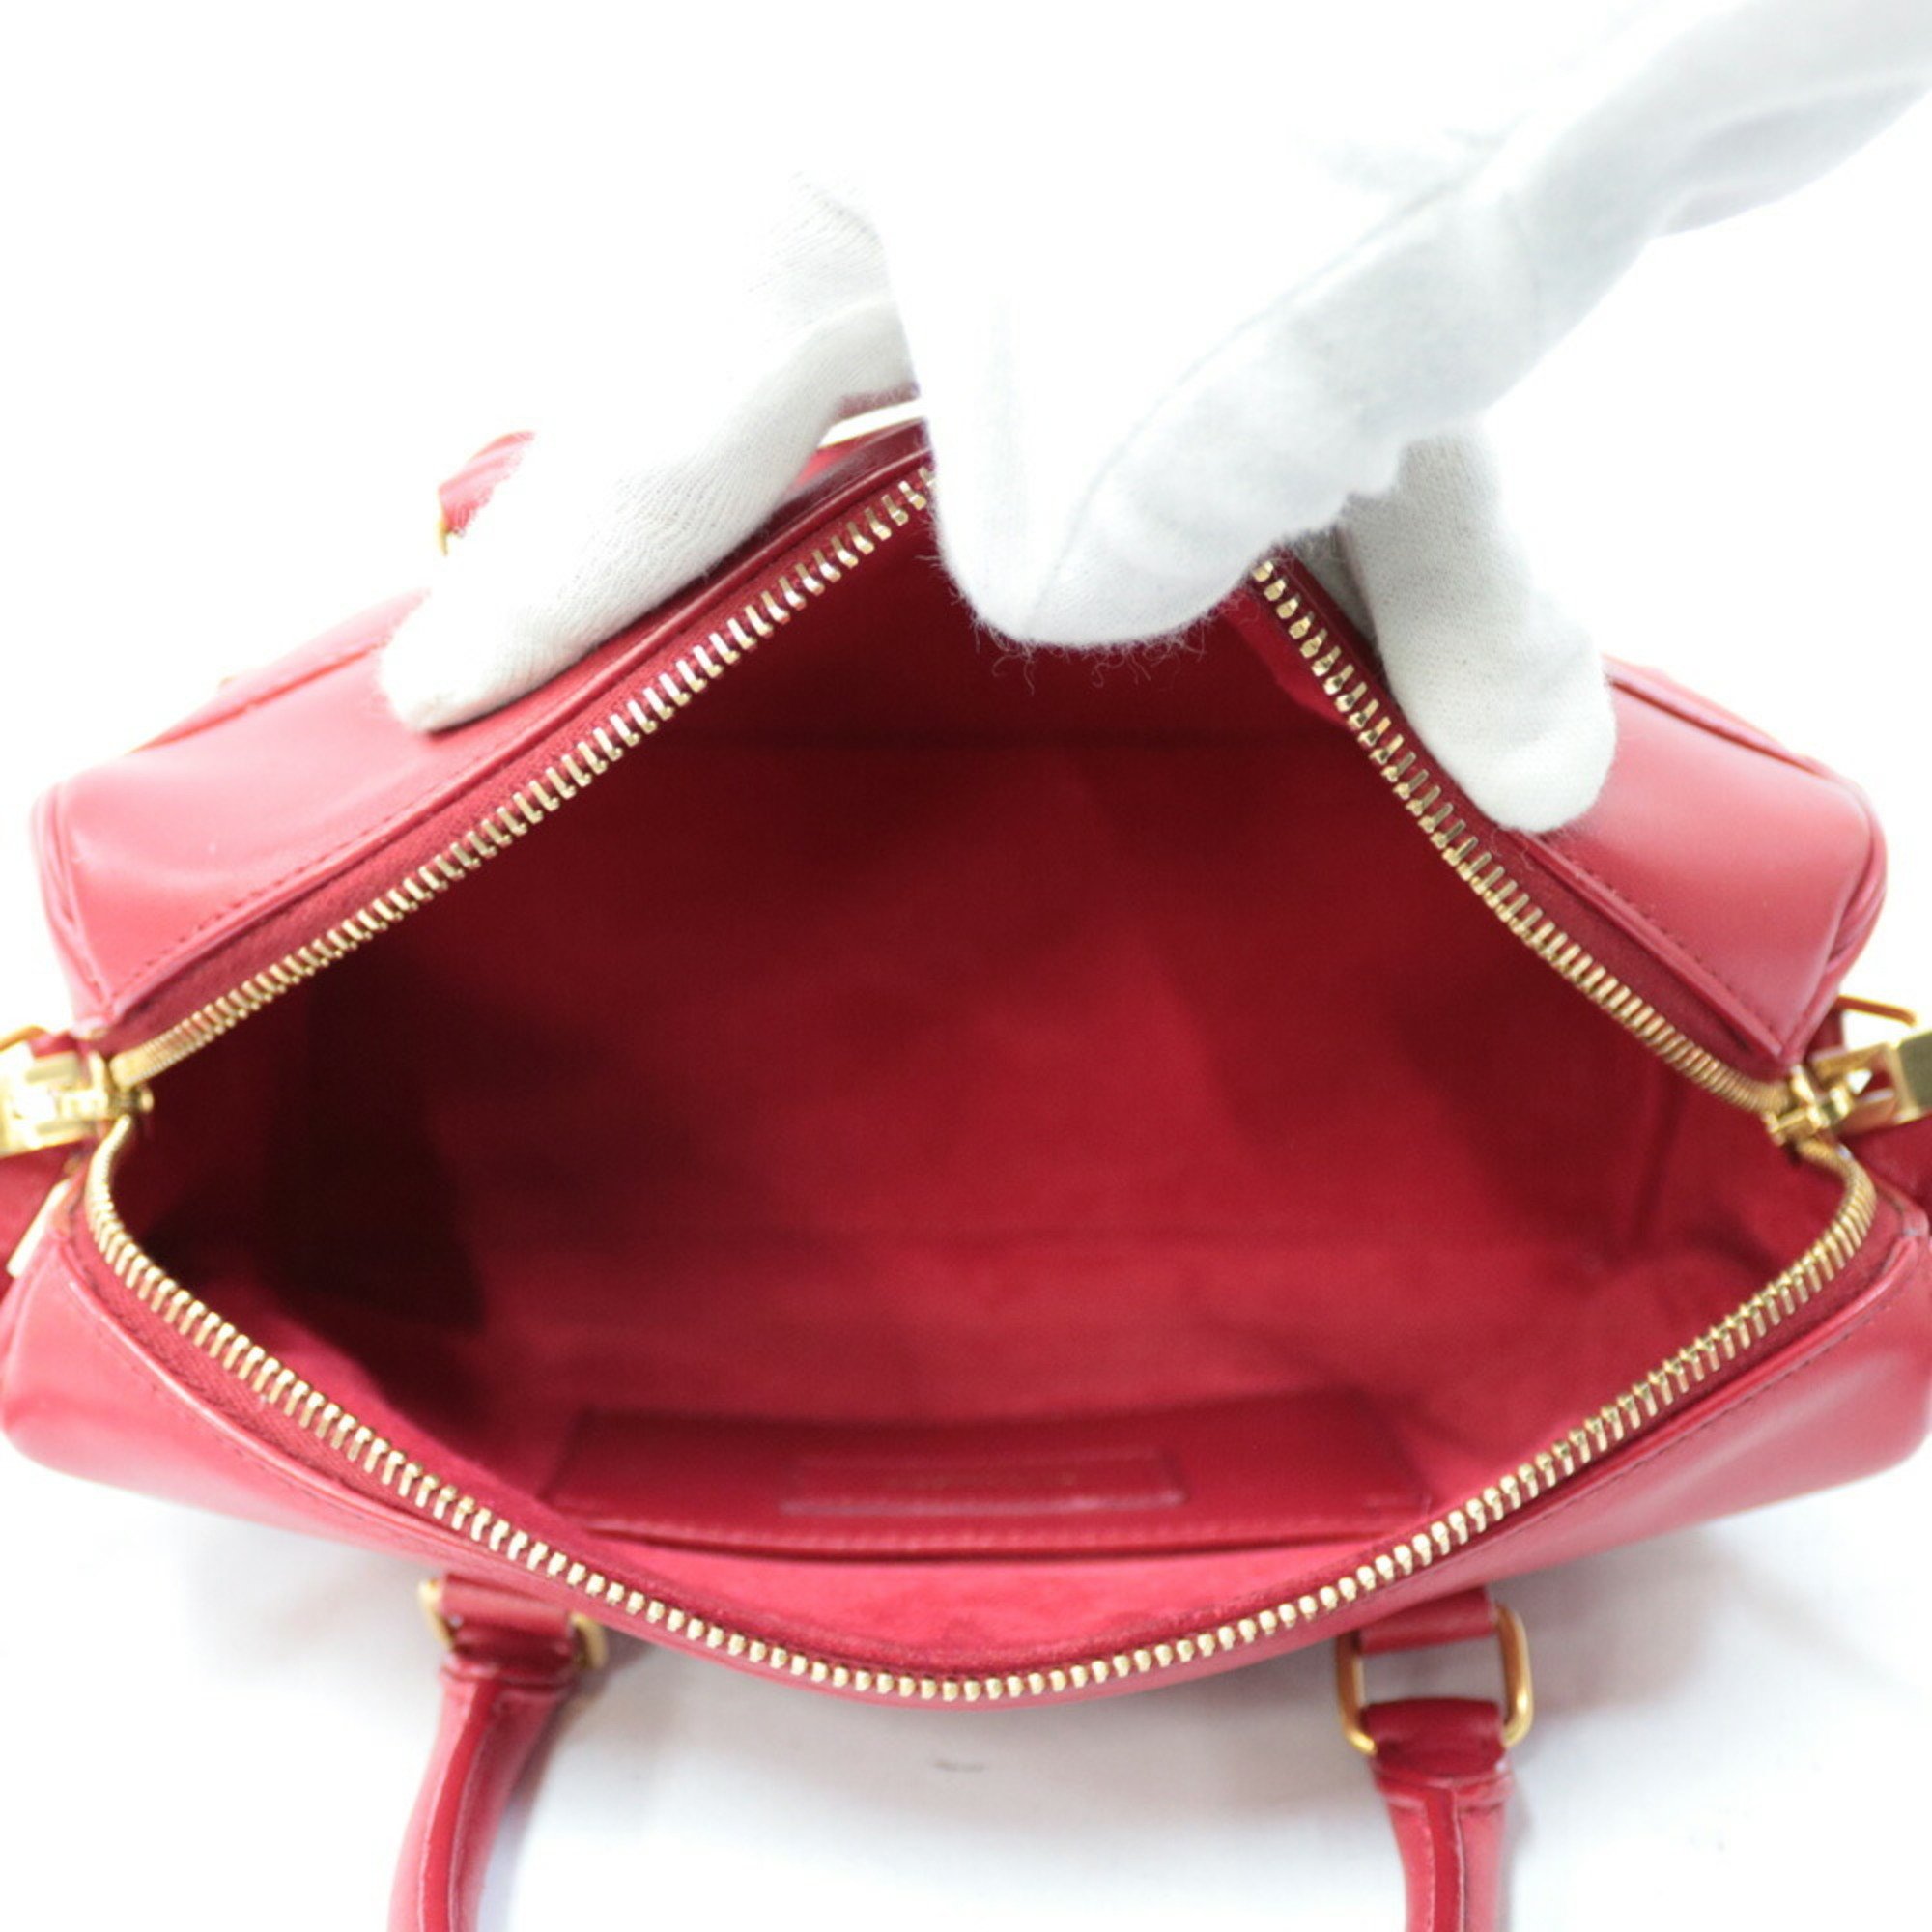 SAINT LAURENT Shoulder Bag Handbag Baby Duffle Red Ladies